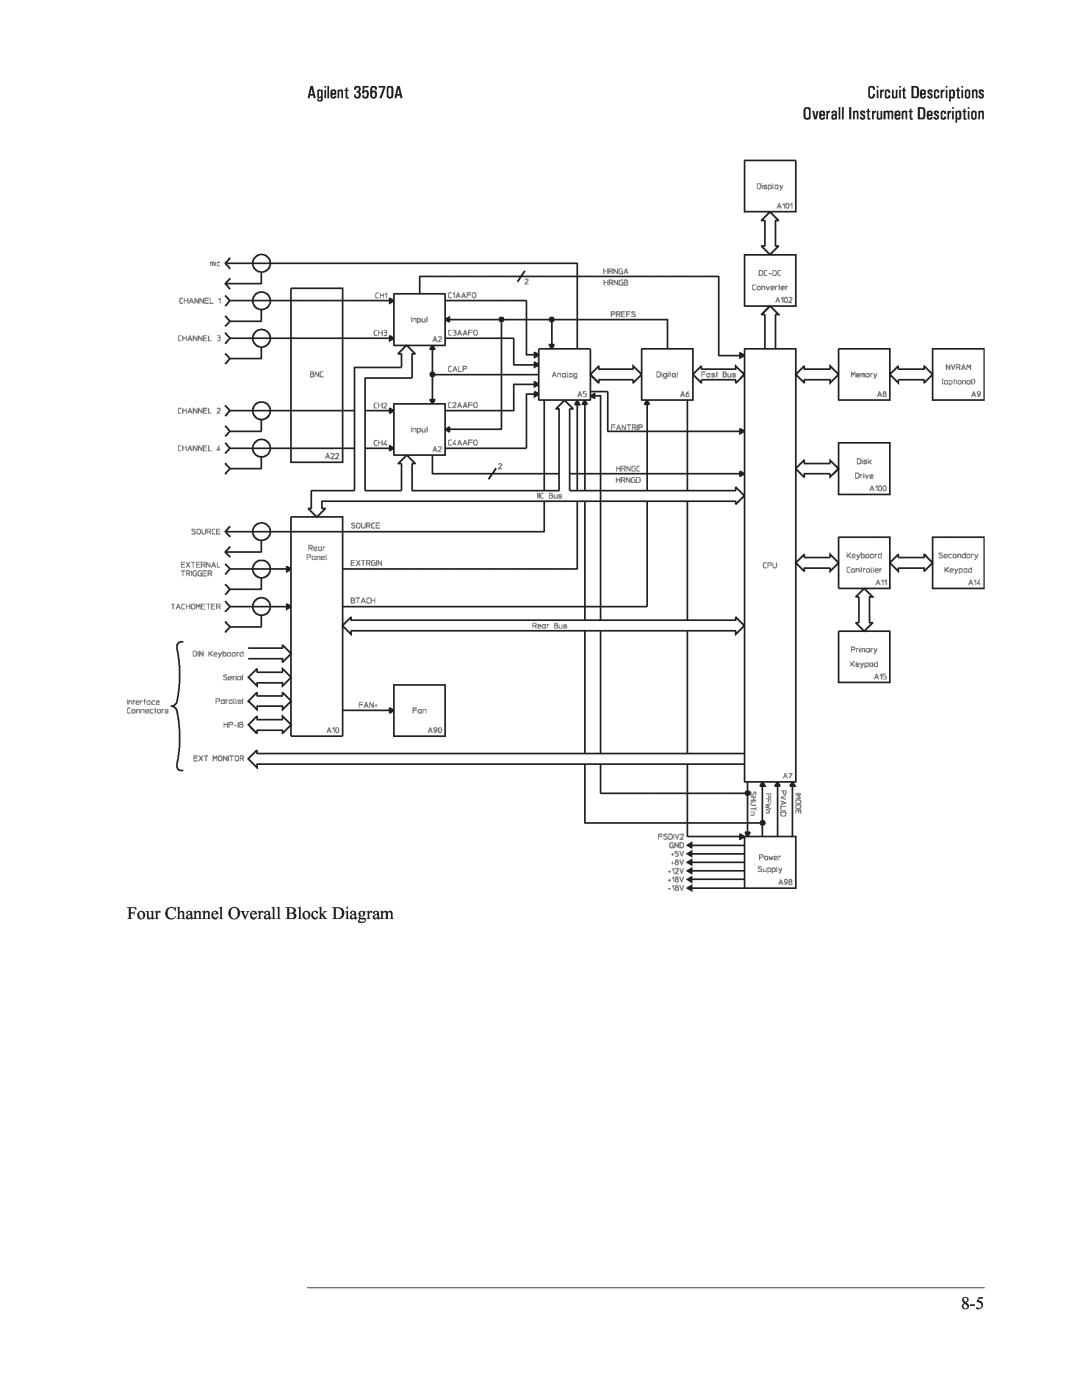 Agilent Technologies 35670-90066 manual Agilent 35670A, Circuit Descriptions, Overall Instrument Description 